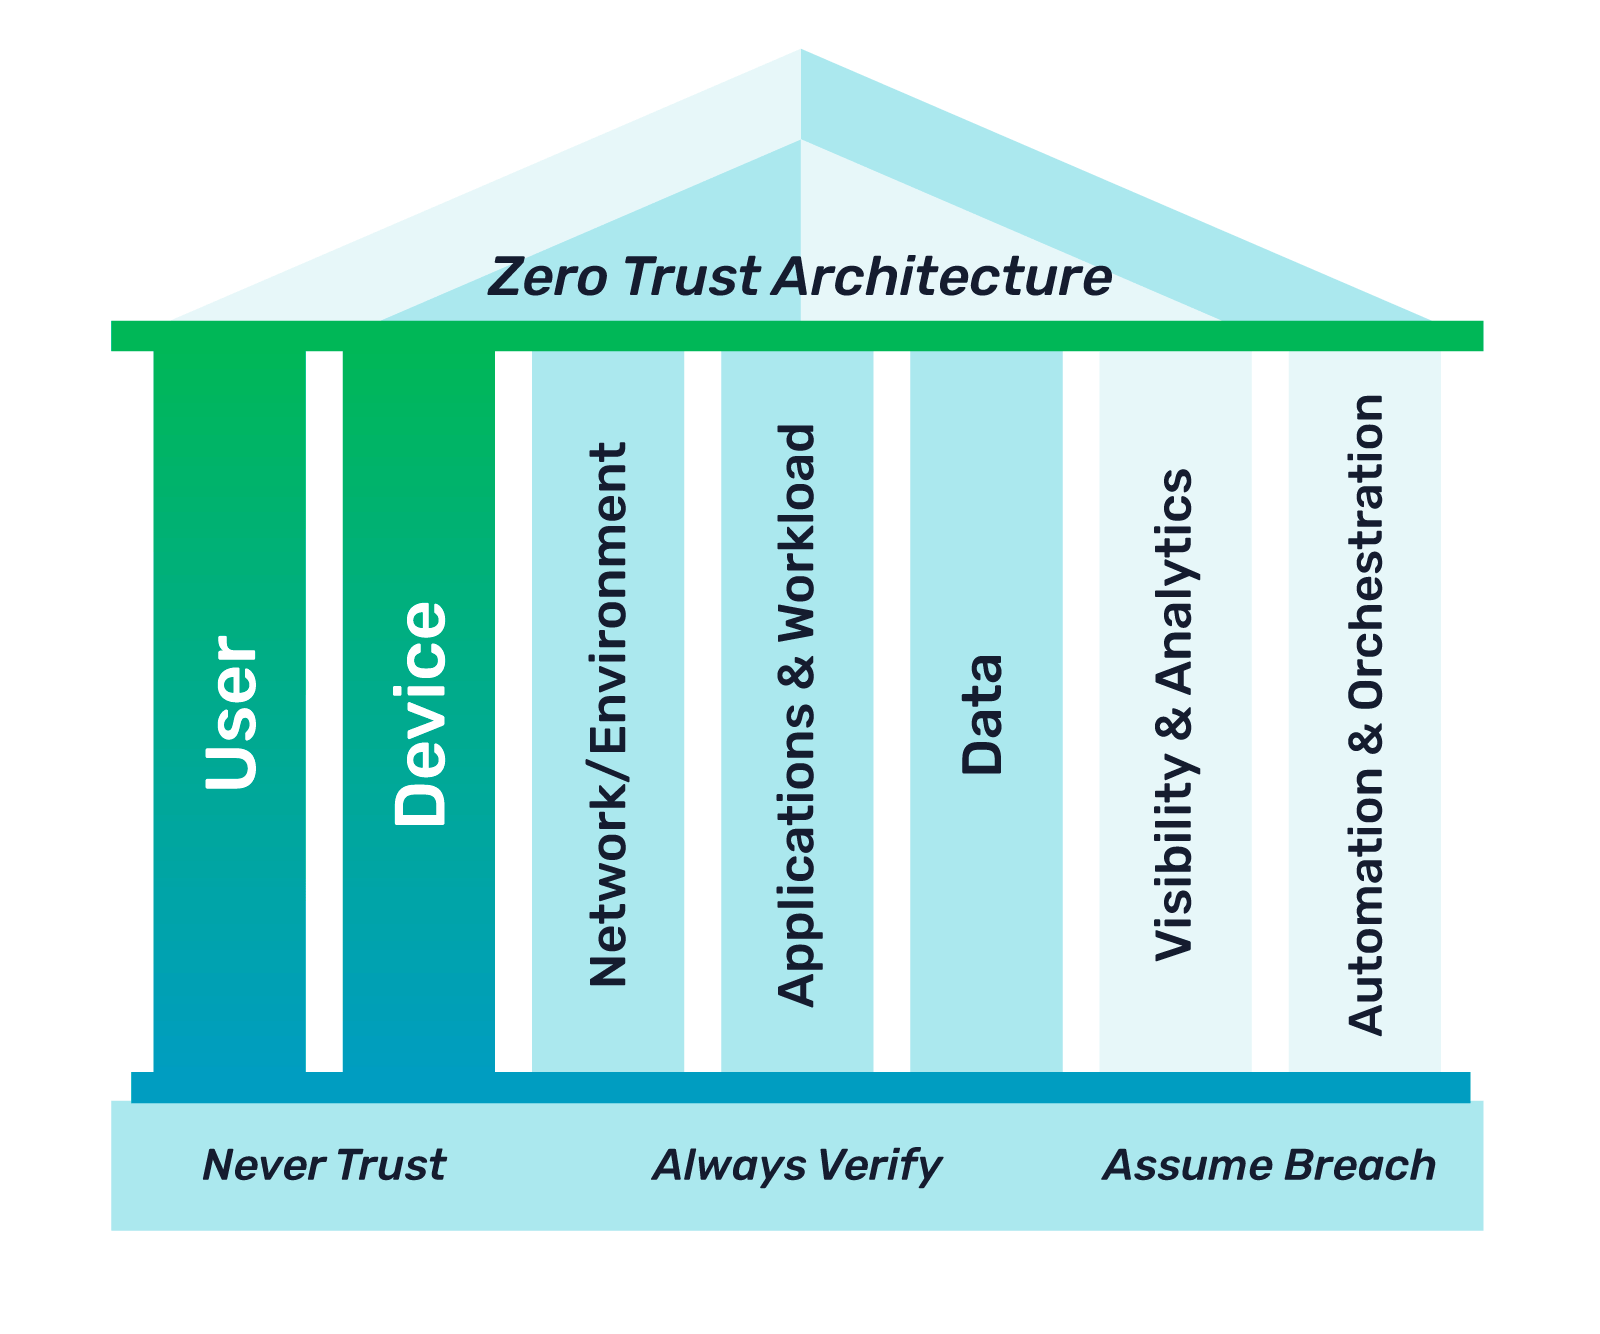 Zero Trust Architecture pillars